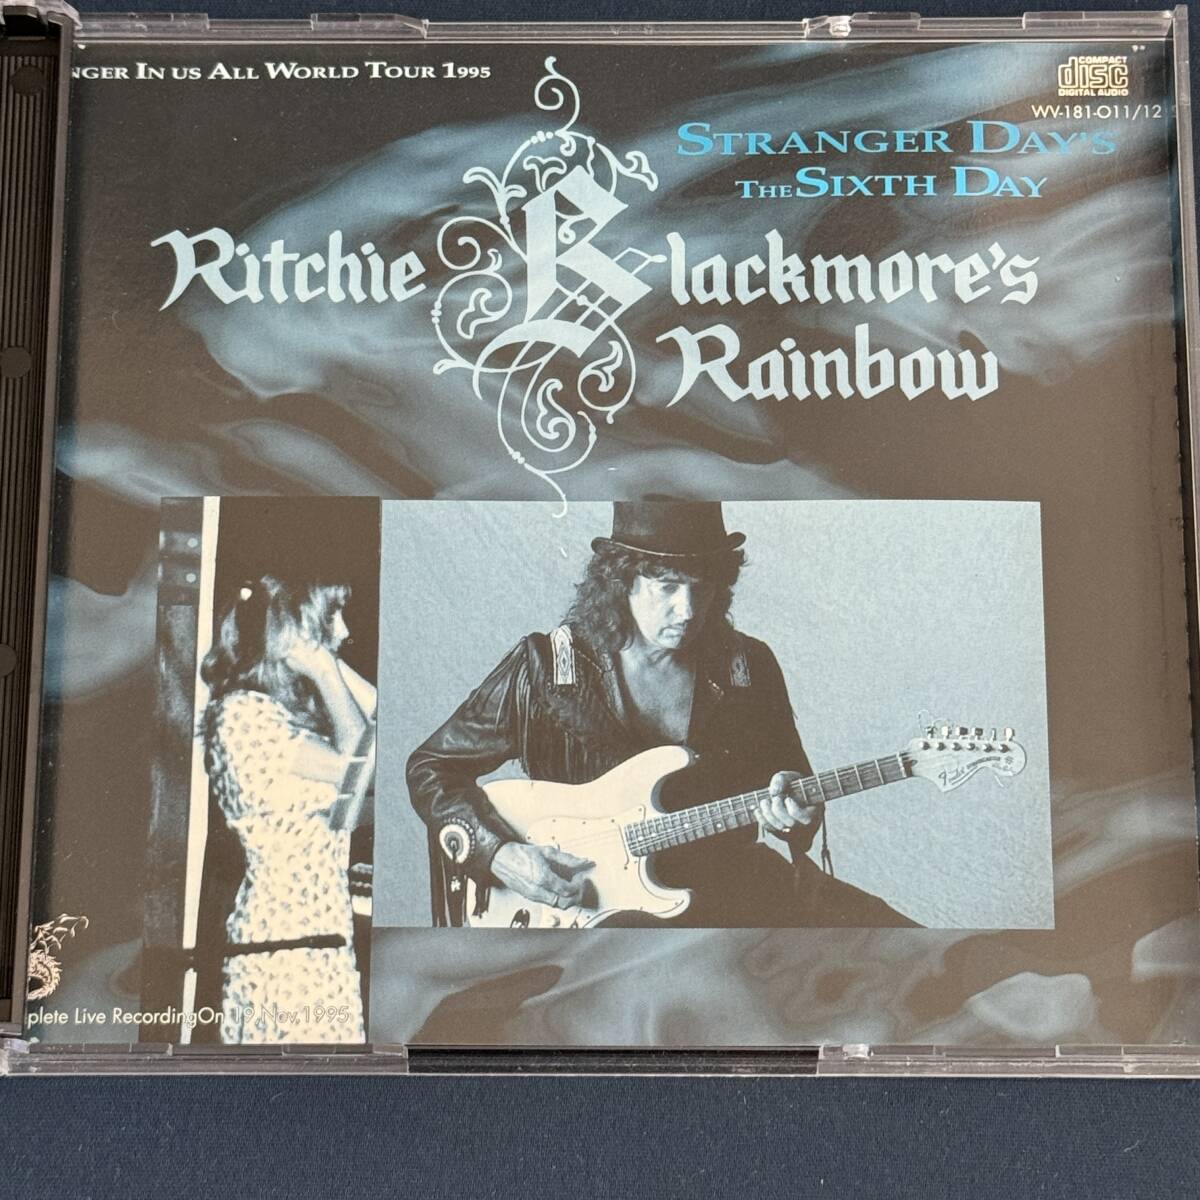 [CD] Rainbow /STRANGER DAY*S THE SIXTH DAY Rainbow black moa z* Rainbow Ritchie Blackmore